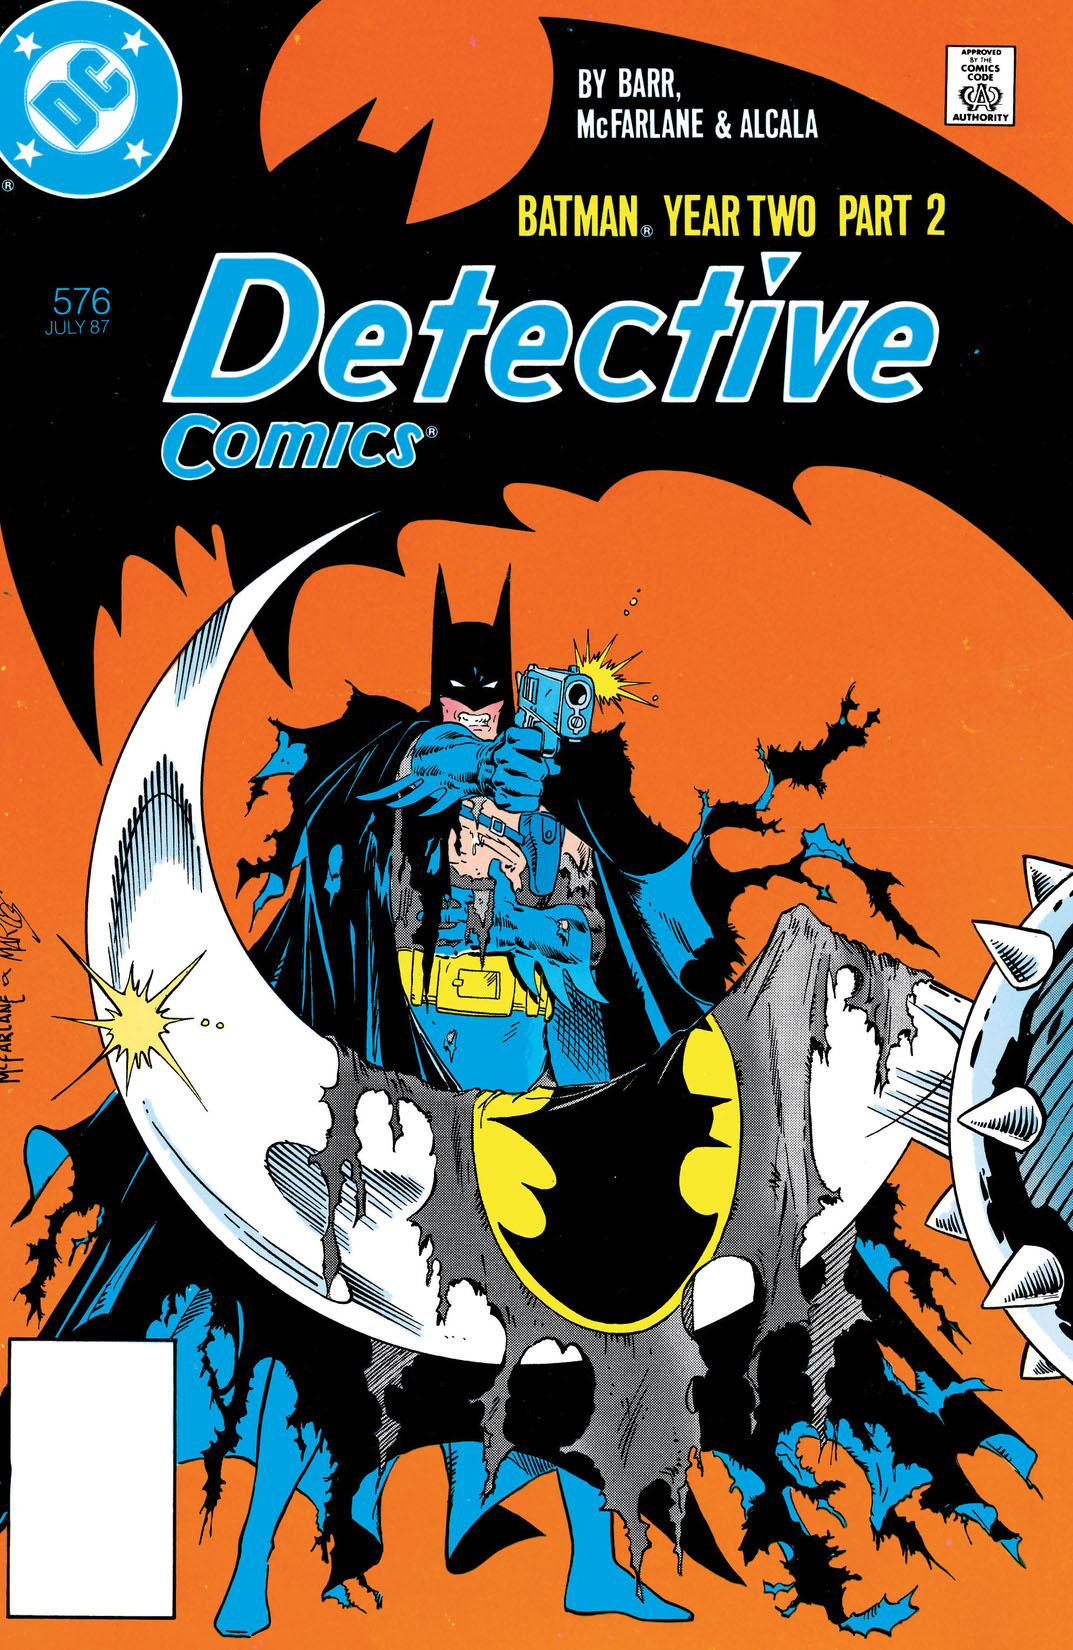 Detective Comics (1937-) #576 preview images